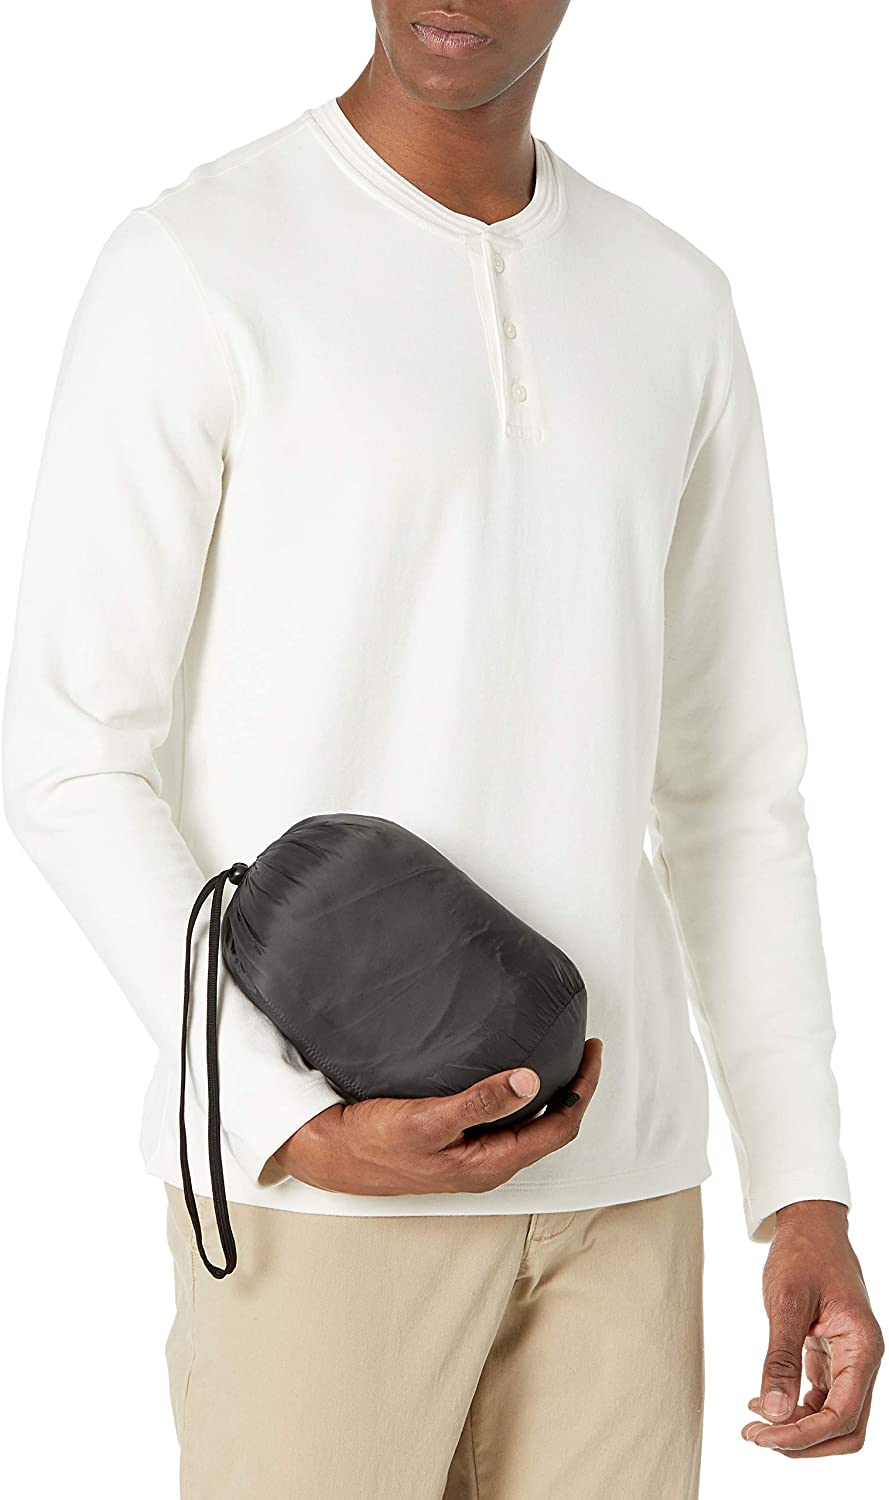 Hisir Club Men's Lightweight Water-Resistant Packable Puffer Jacket